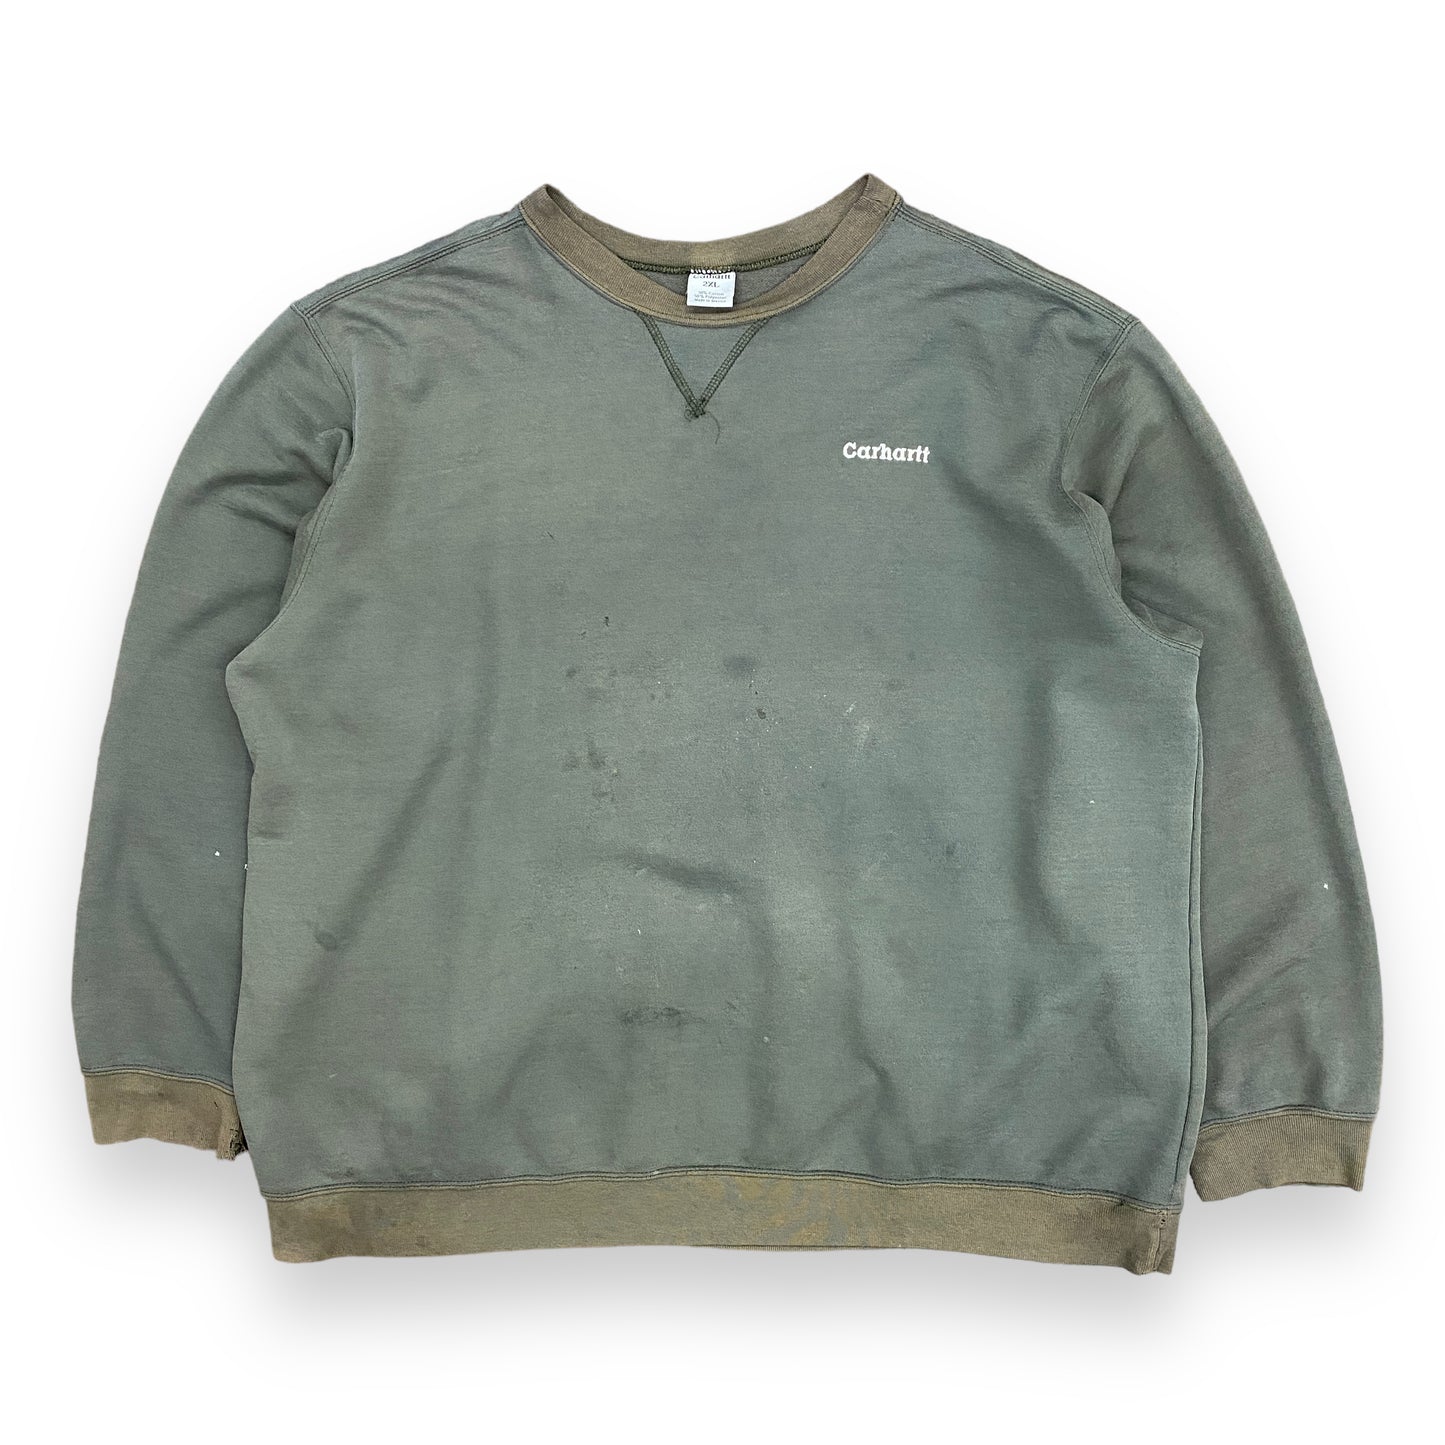 Vintage Oversized Thrashed Carhartt Crewneck Sweatshirt - Size XXL